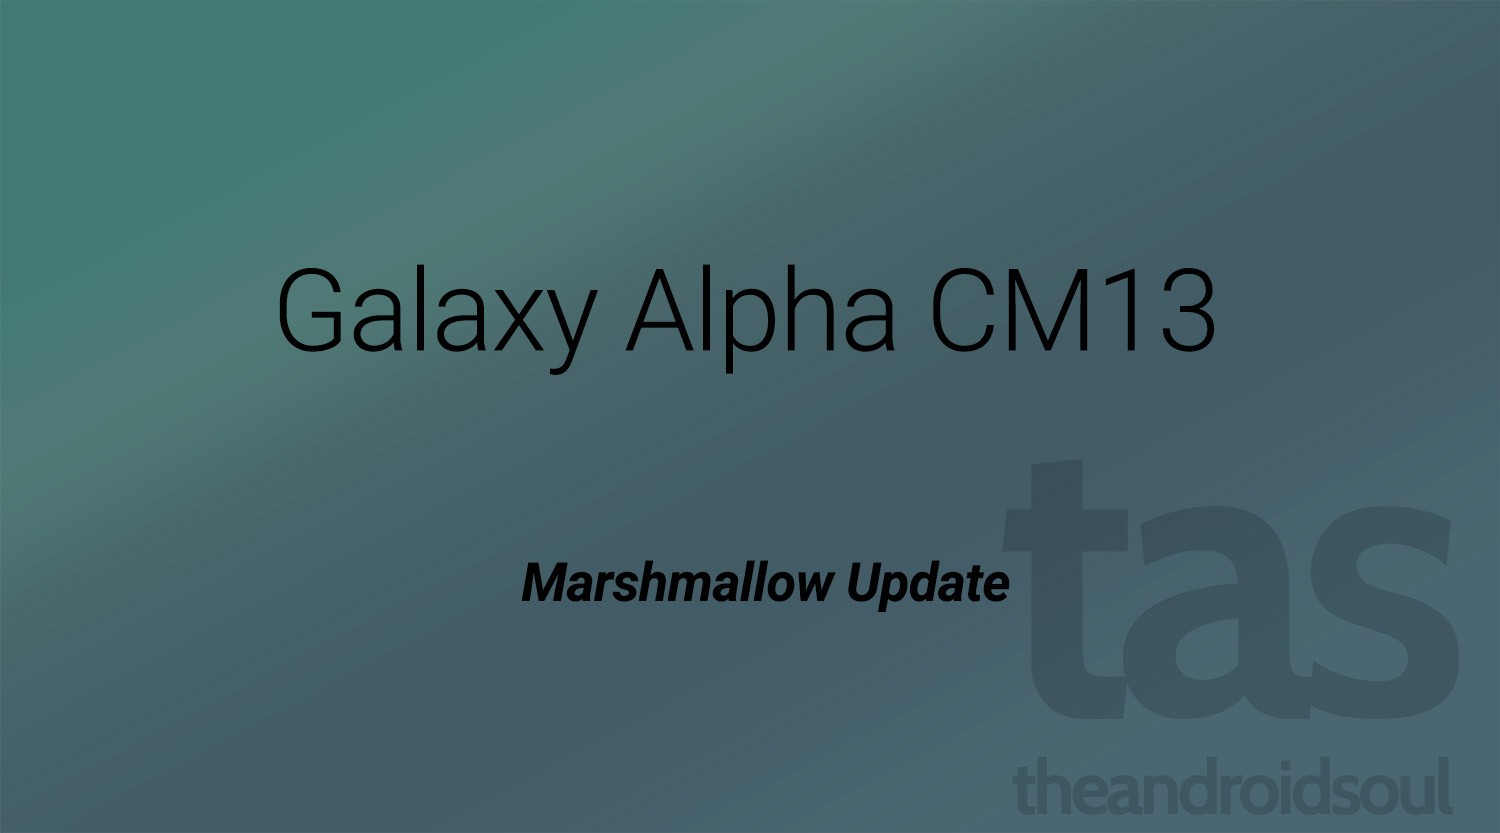 Descargar Galaxy Alpha CM13 para la actualización de Marshmallow